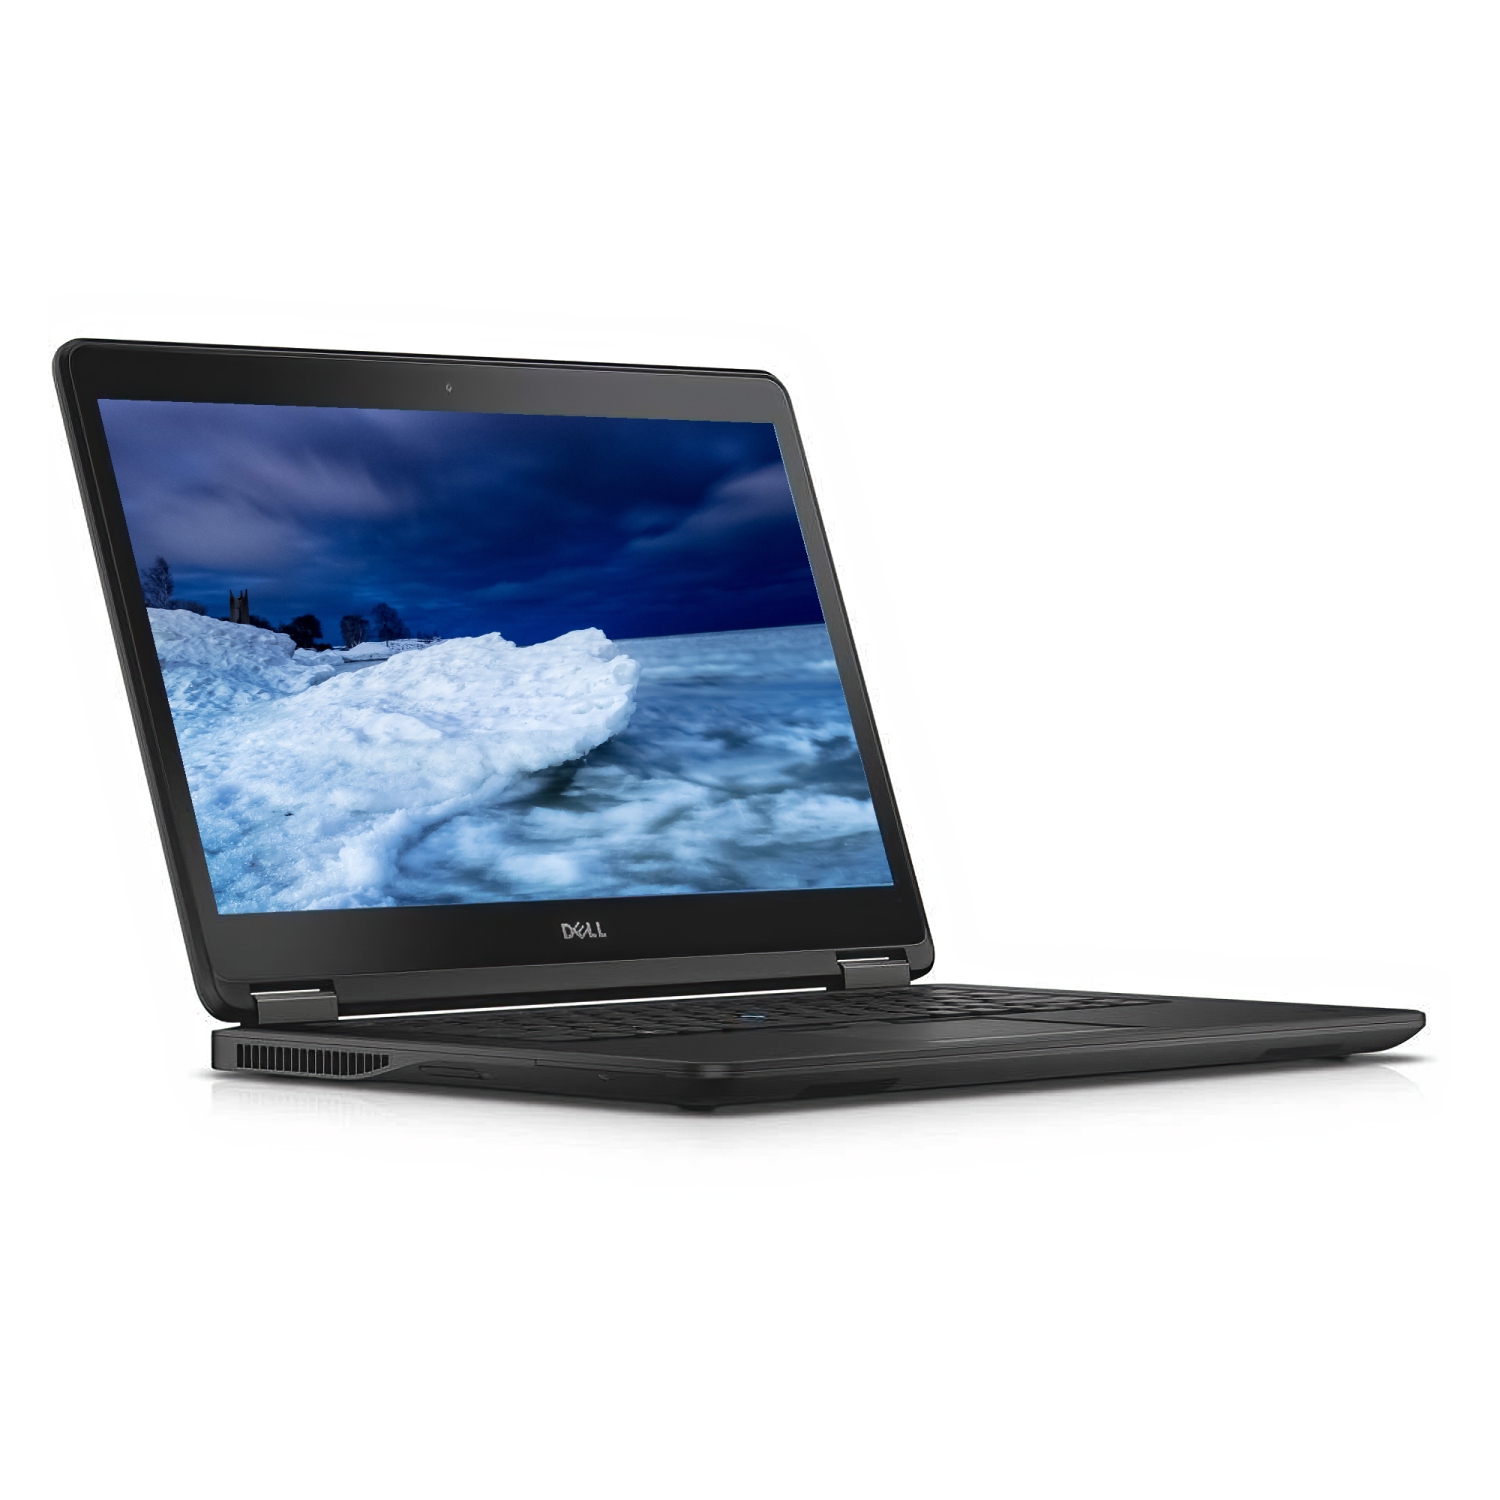 Refurbished (Good) - Dell Latitude E7450 Ultrabook 14 inch FHD Laptop intel core i7 5th Gen(5600U) @3.2GHz 8GB DDR3 RAM 512GB SSD Win 10 Pro Backlit WIFi HDMI